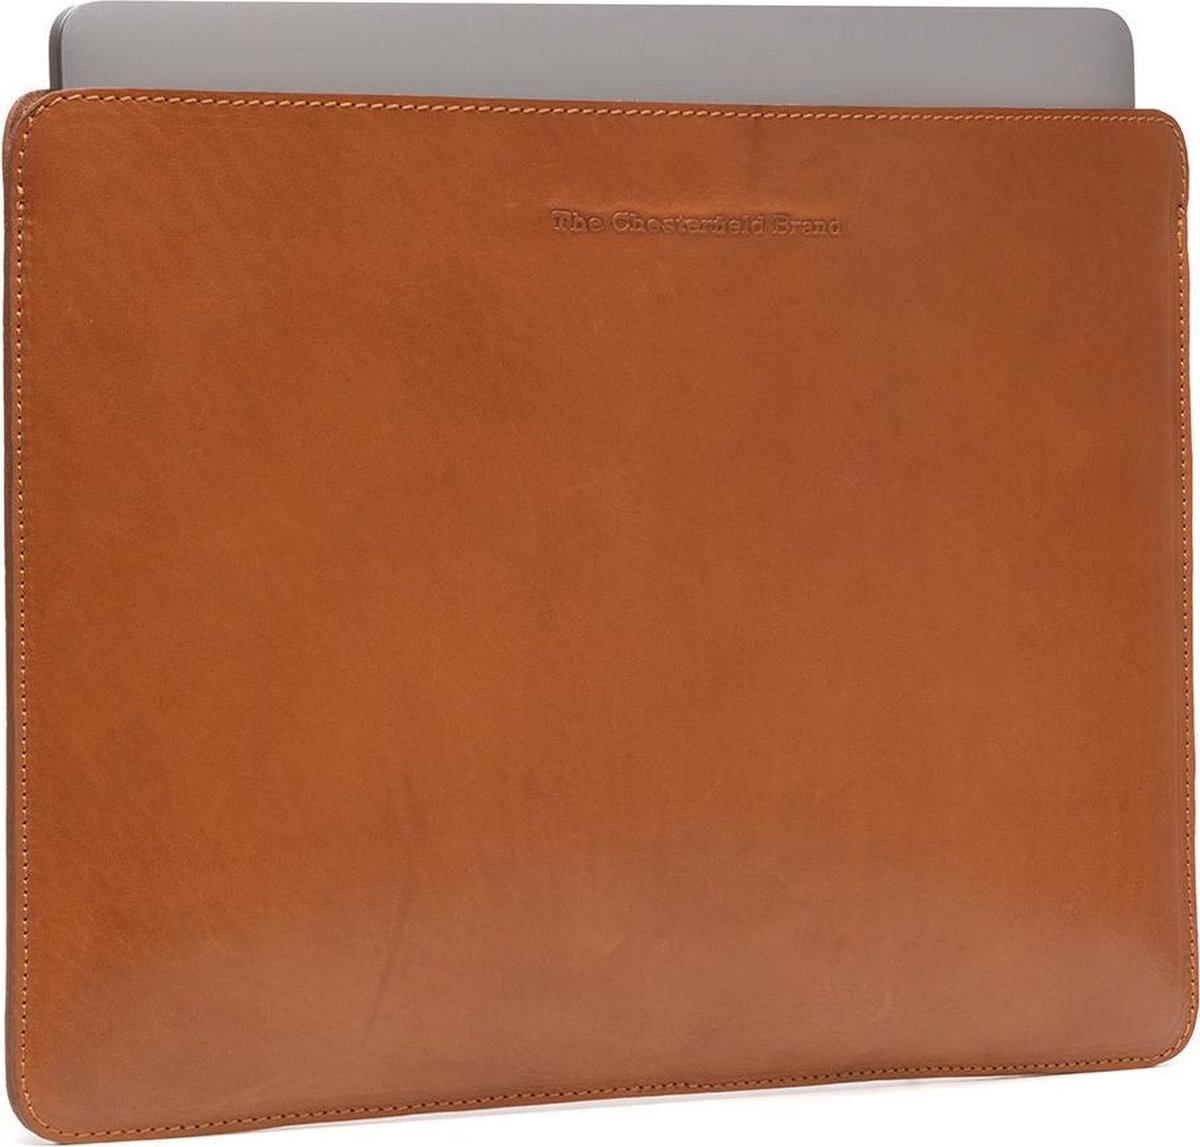 The Chesterfield Brand Leren Laptop Sleeve Cognac Marbella 13 Inch